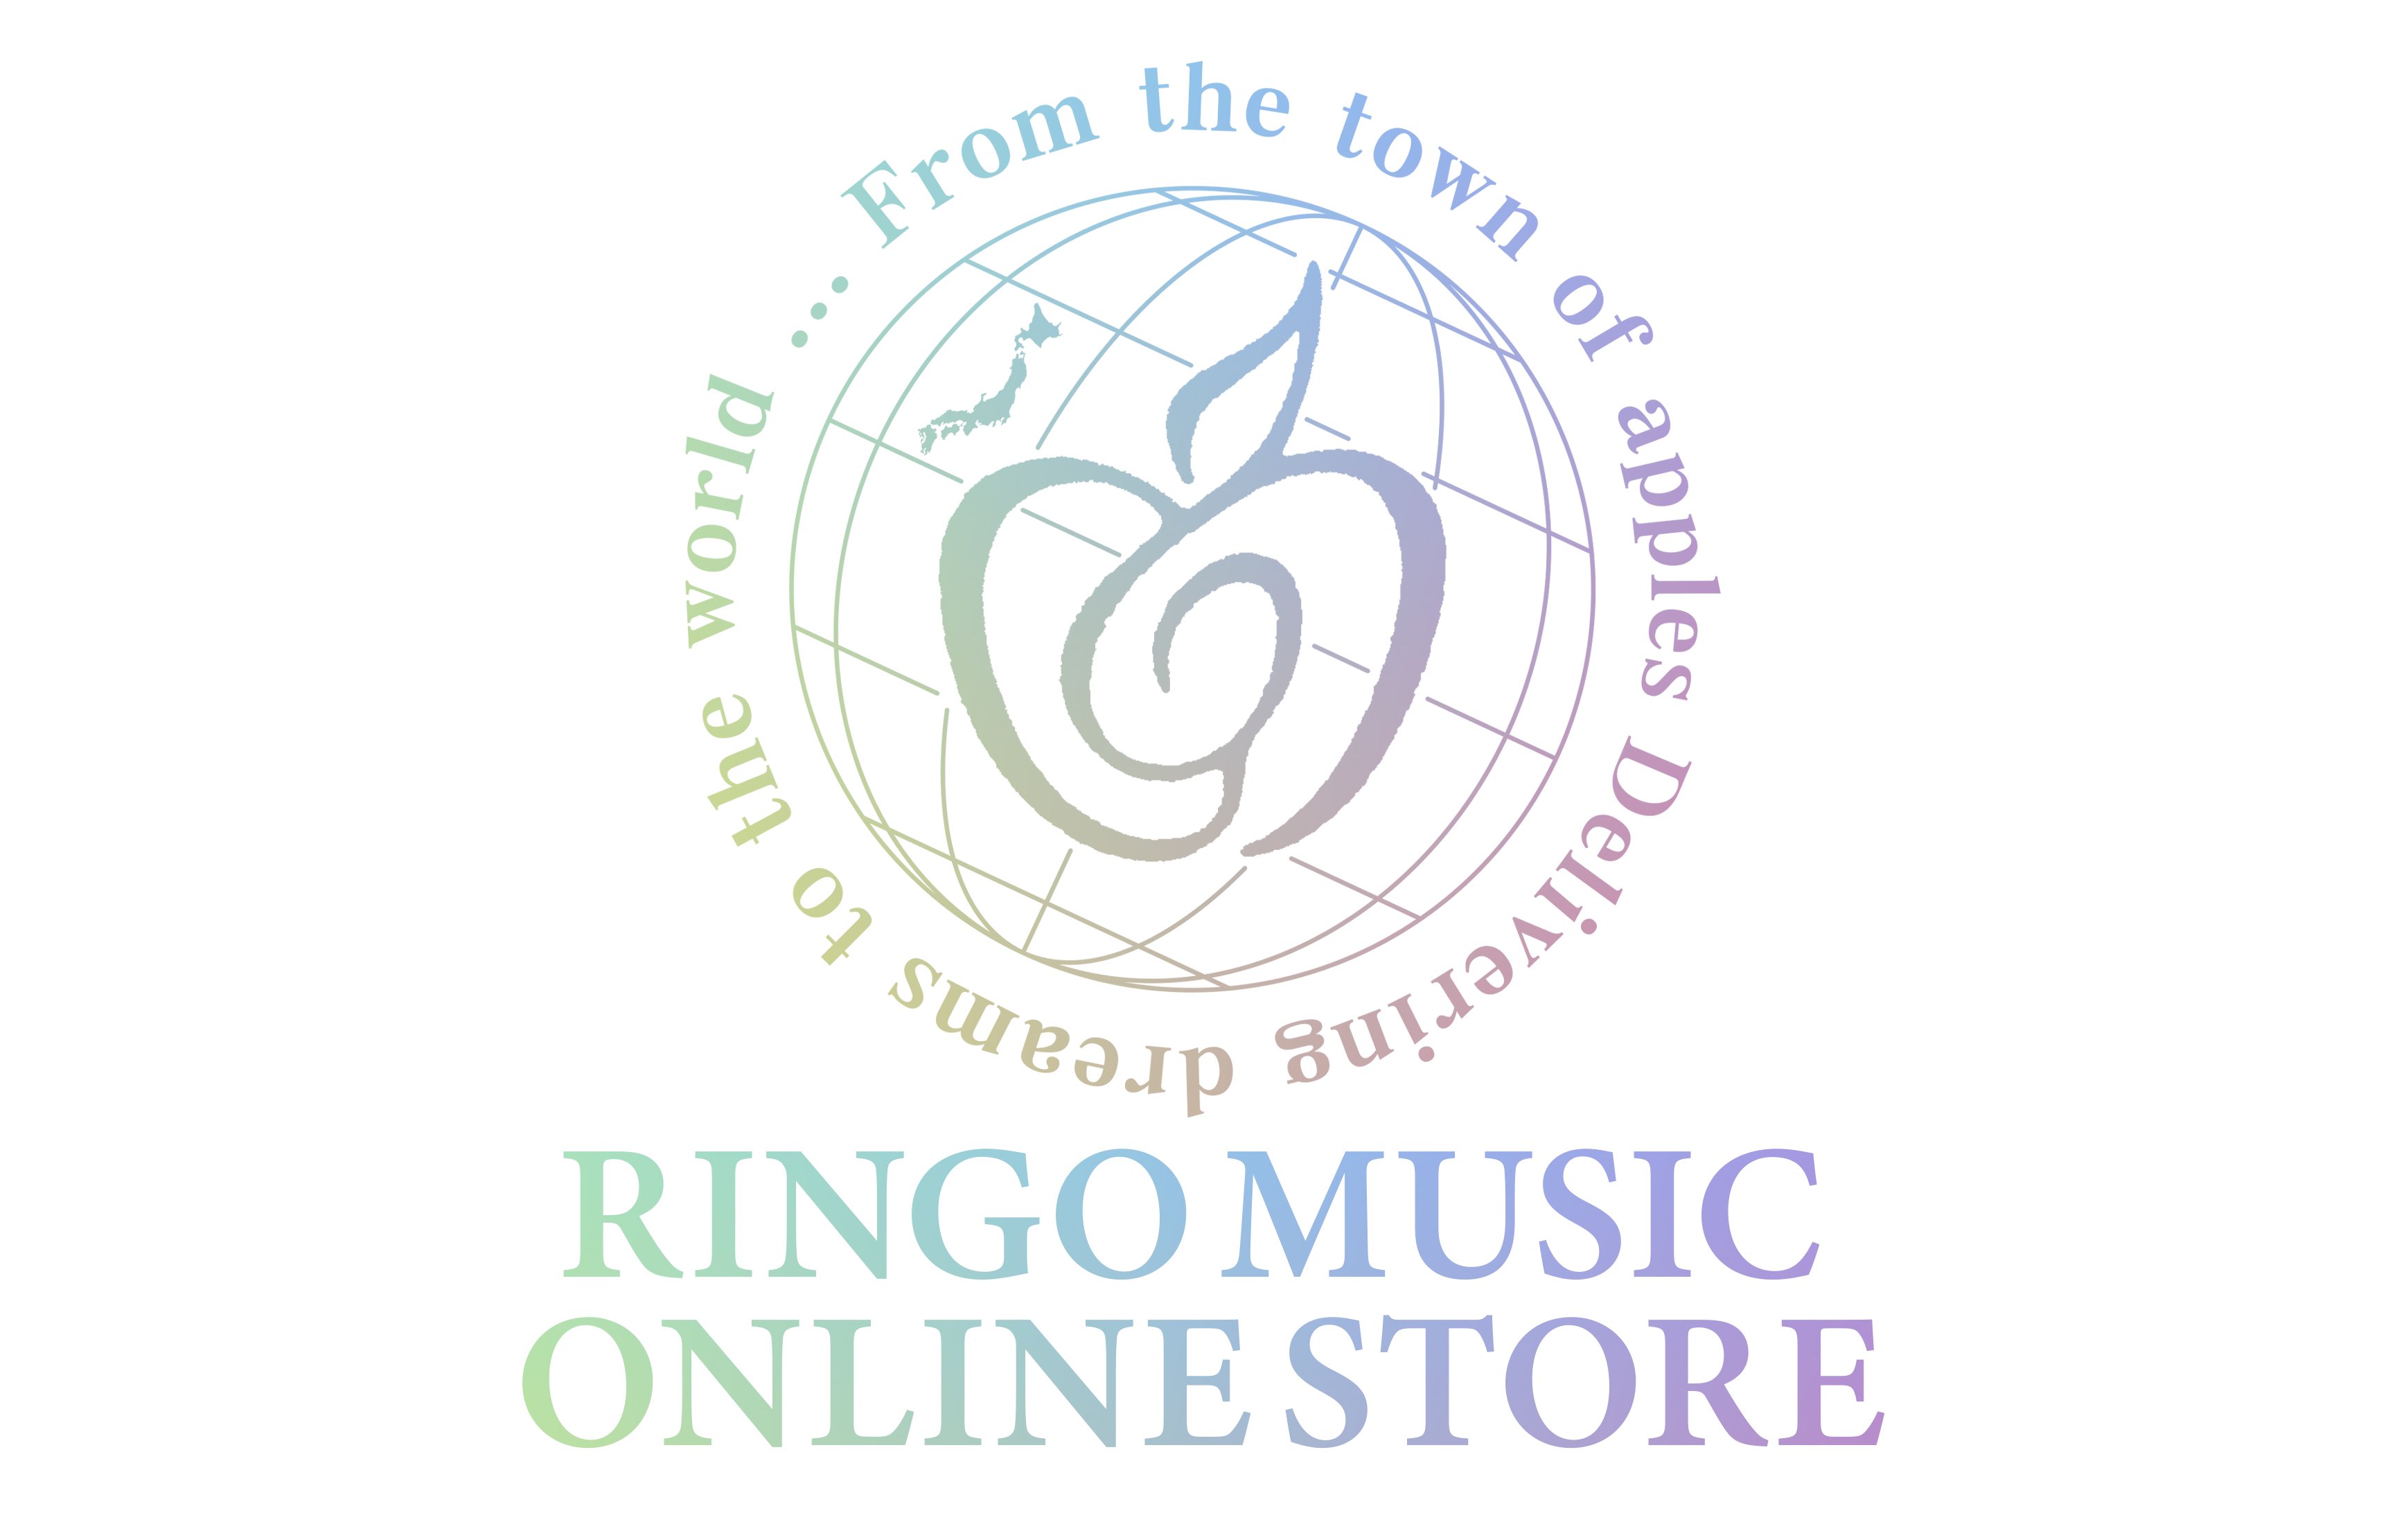 RINGO MUSIC ONLINE STORE